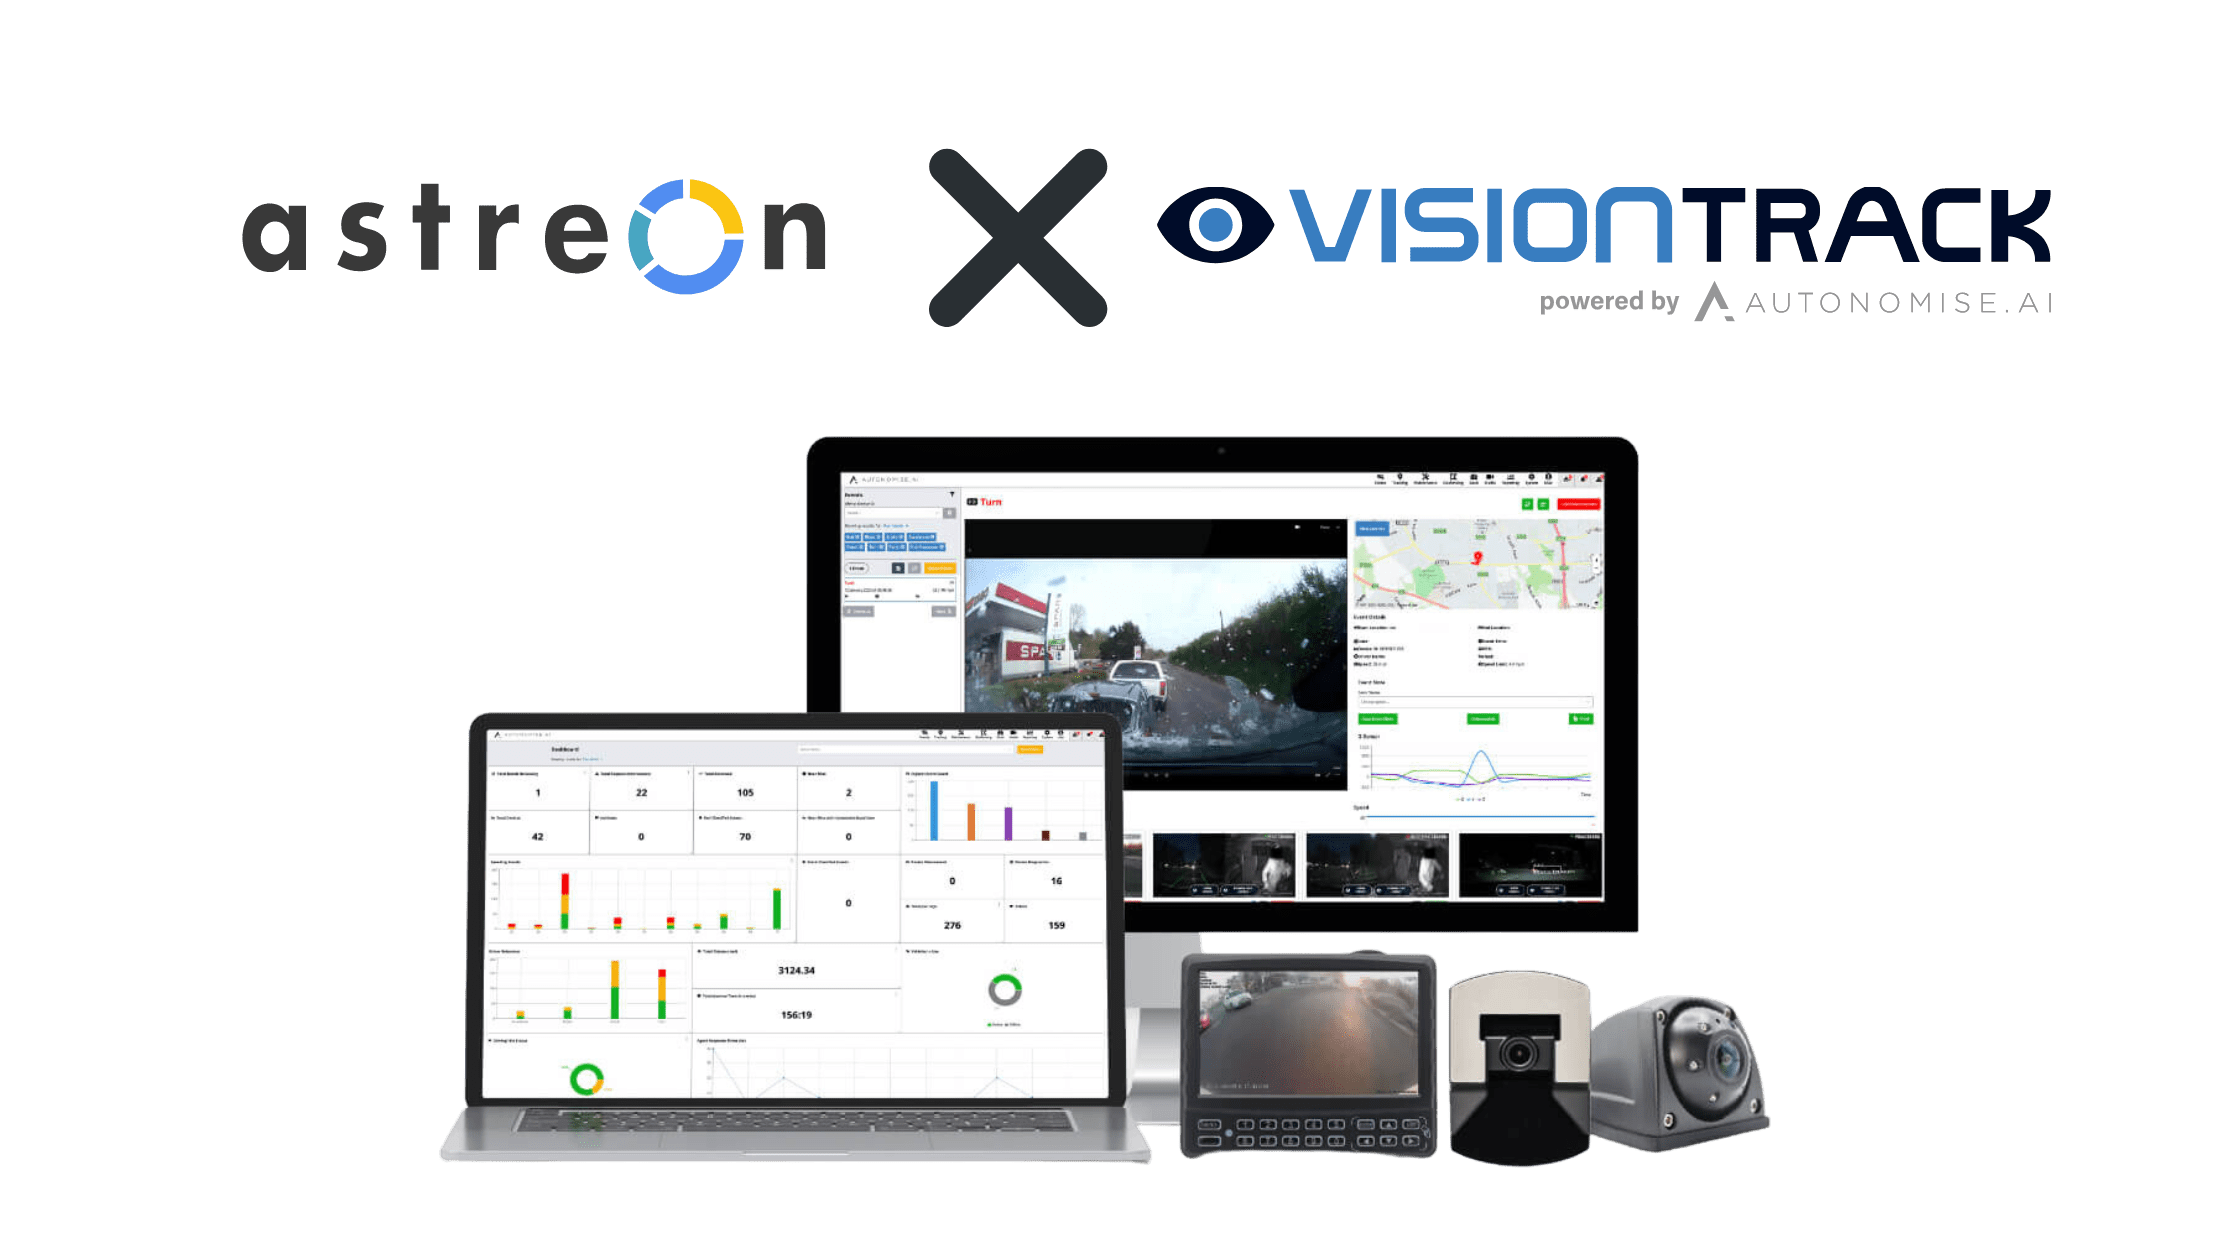 astreon x visiontrack partnership